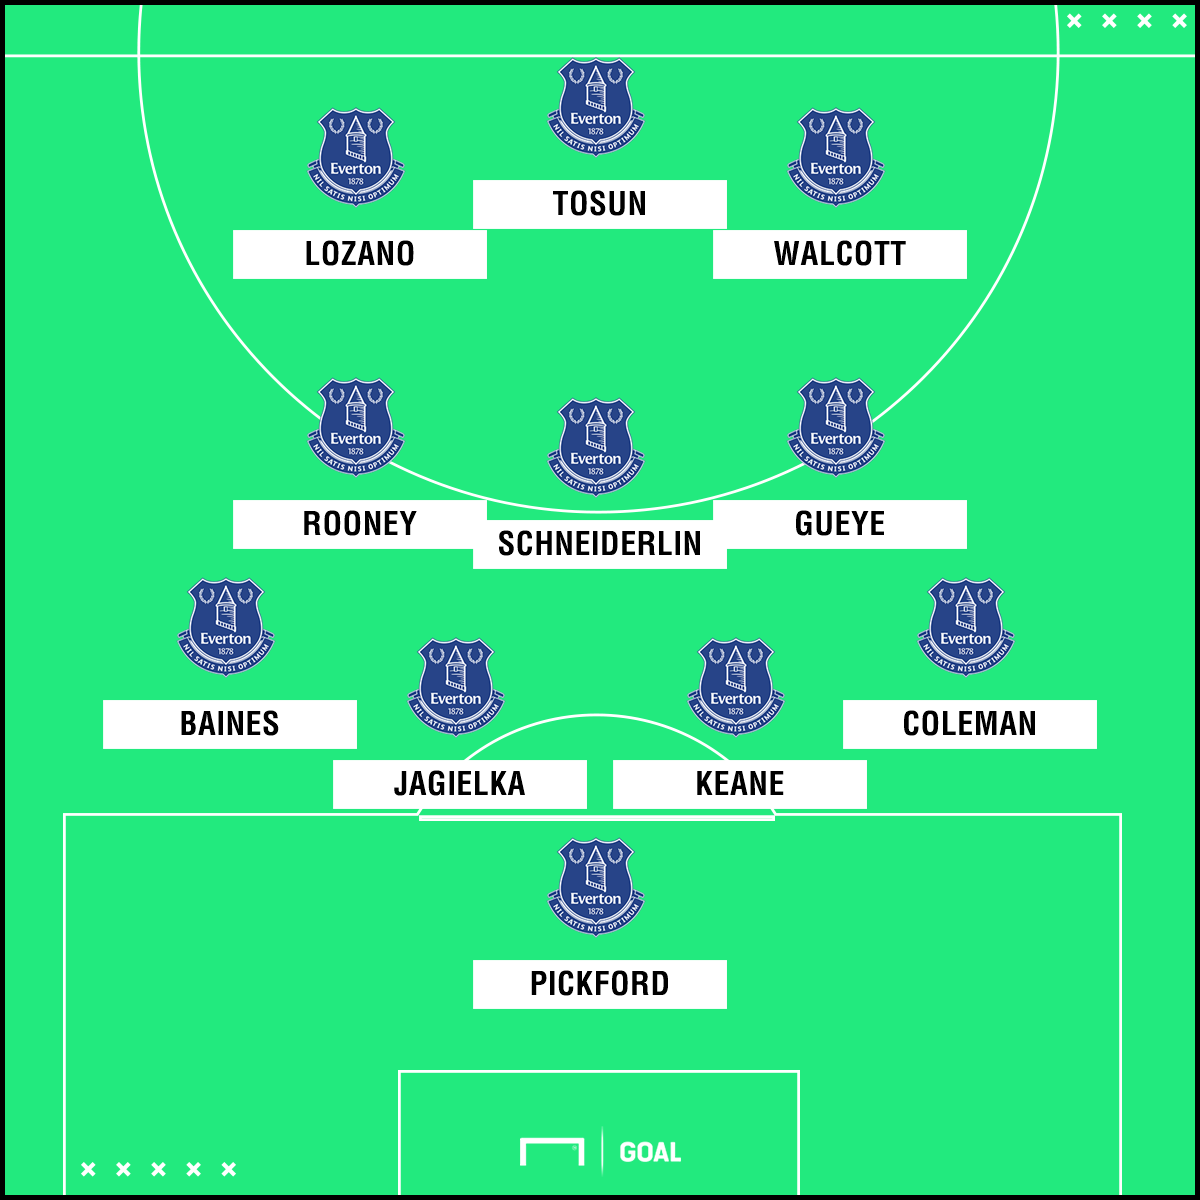 XI Everton